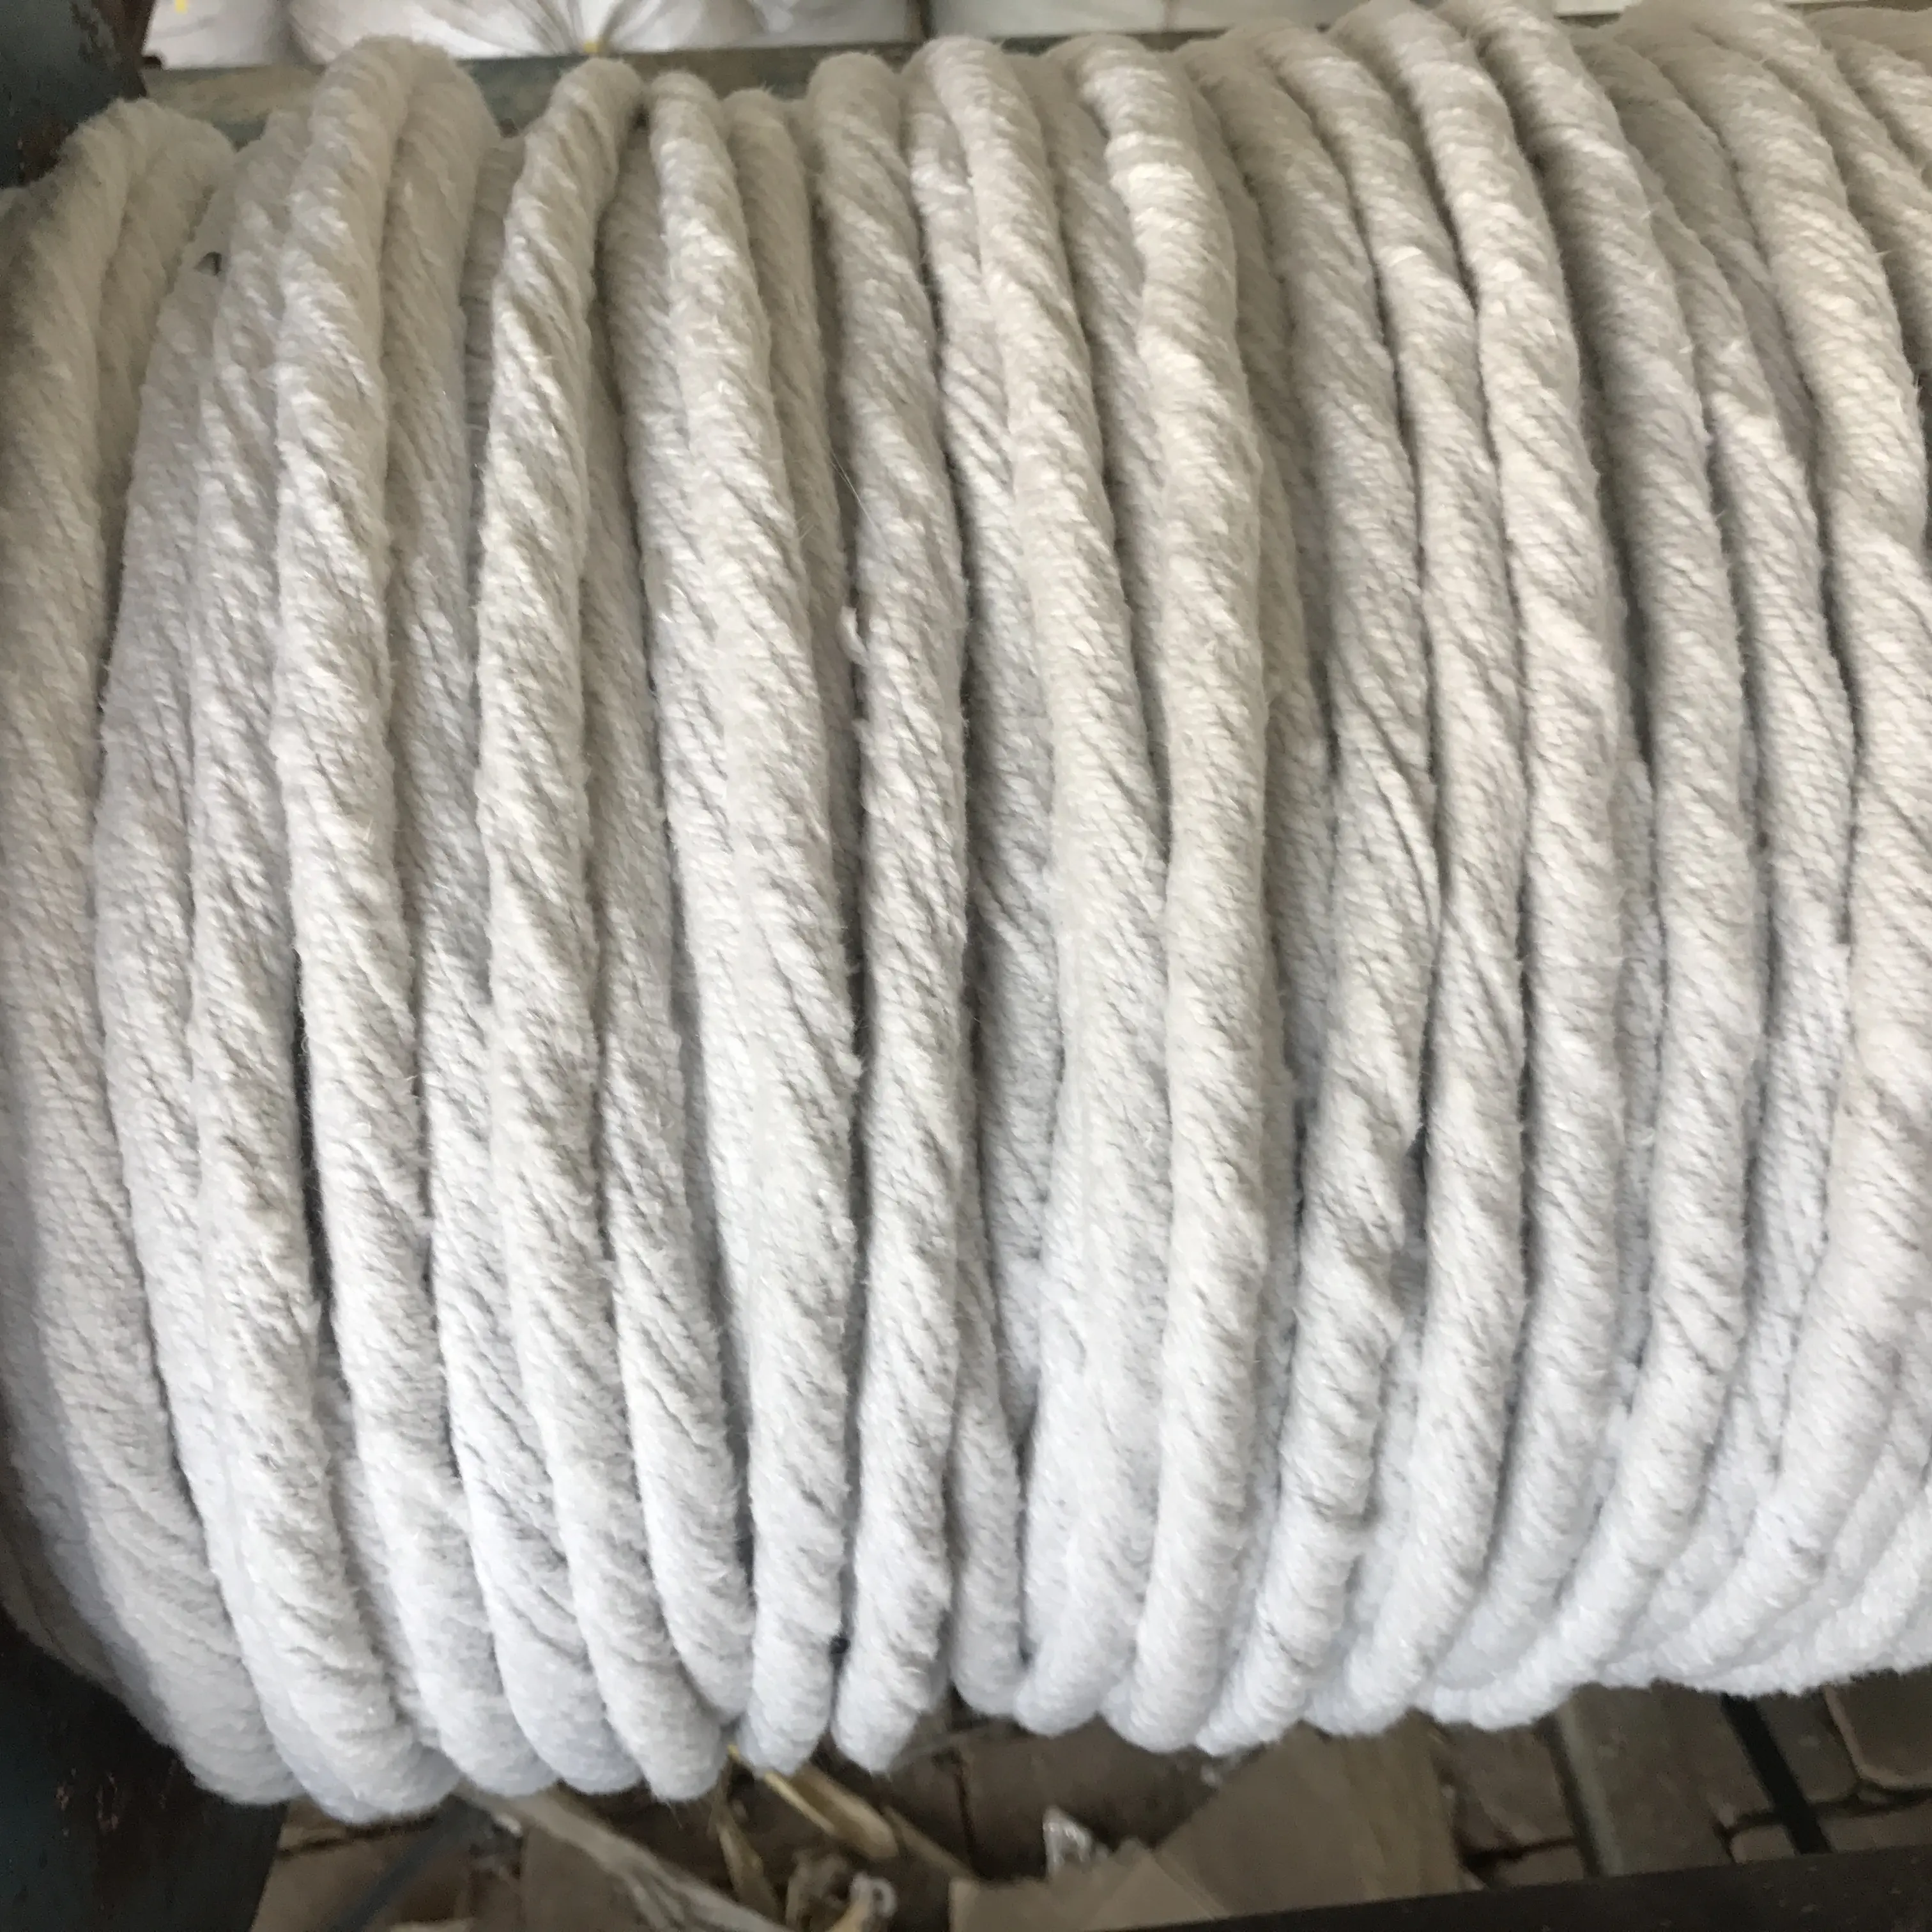 Factory Wholesale Thermal Insulation Ceramic Fiber Twisted Ceramic Fiber Rope for kiln